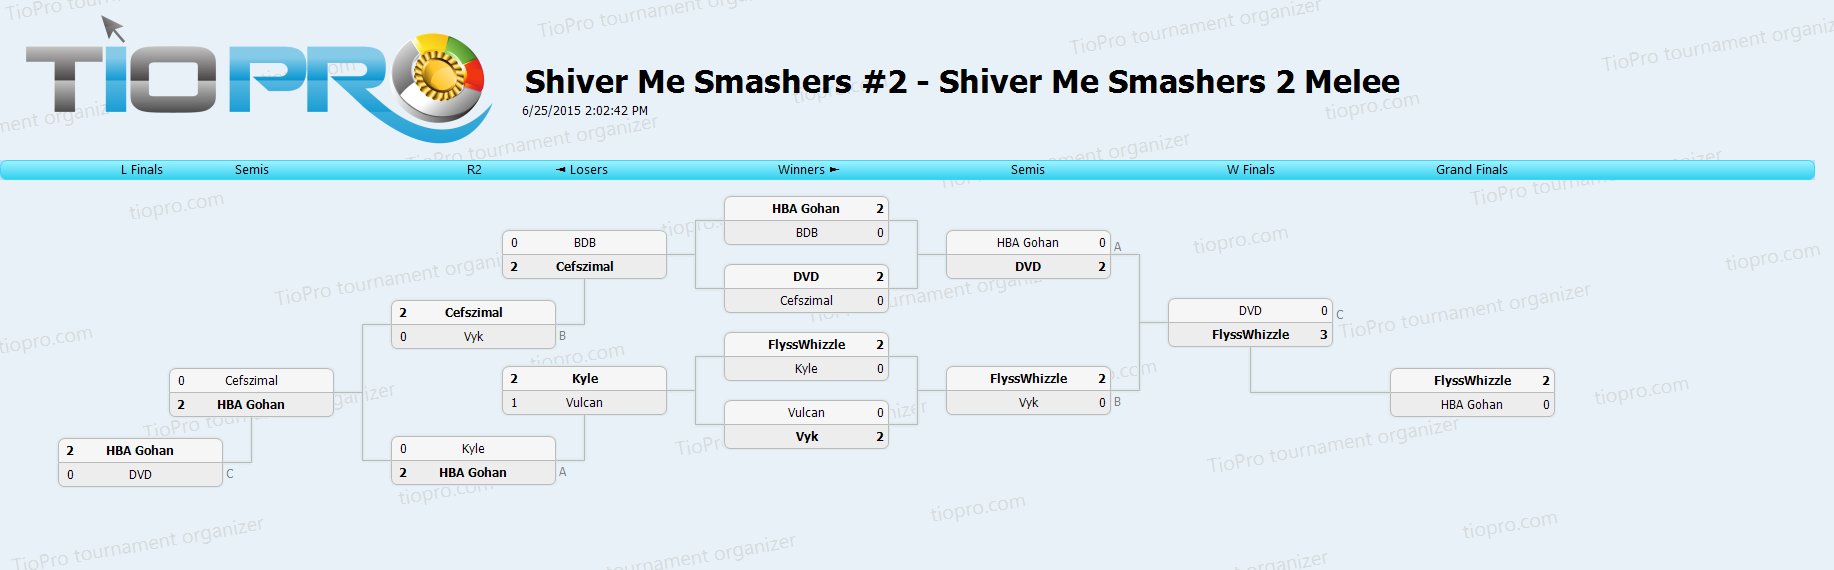 Shiver Me Smashers #2 Melee